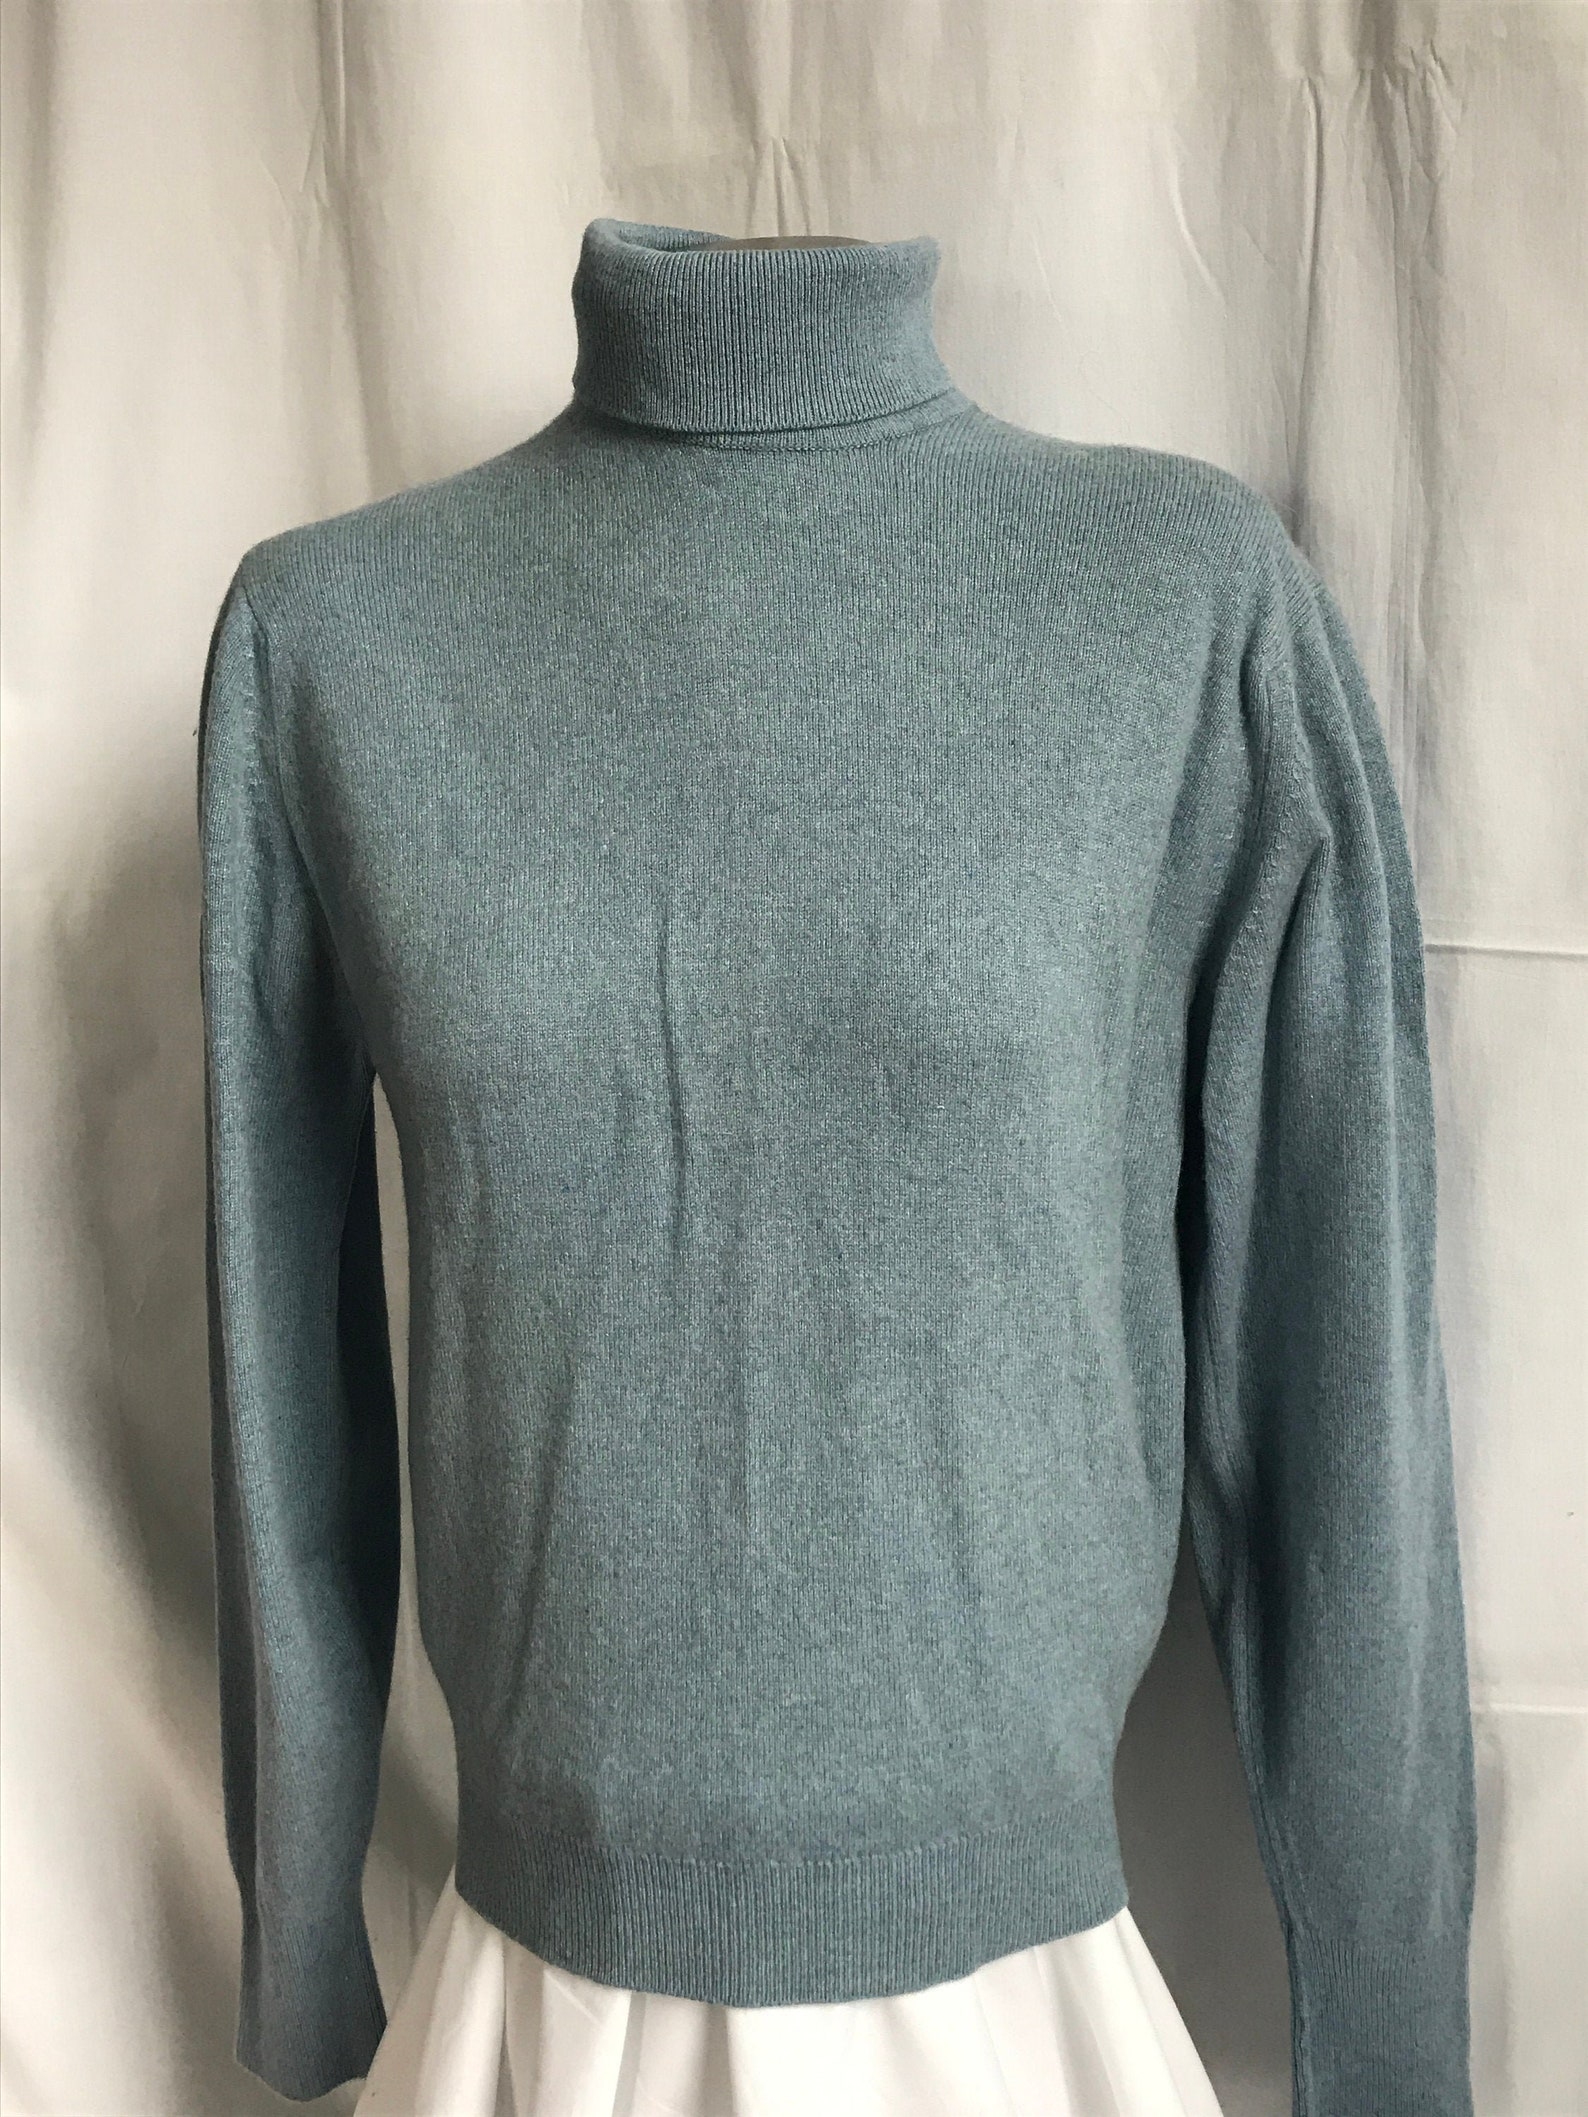 Simple light blue turtleneck cashmere sweater | Etsy